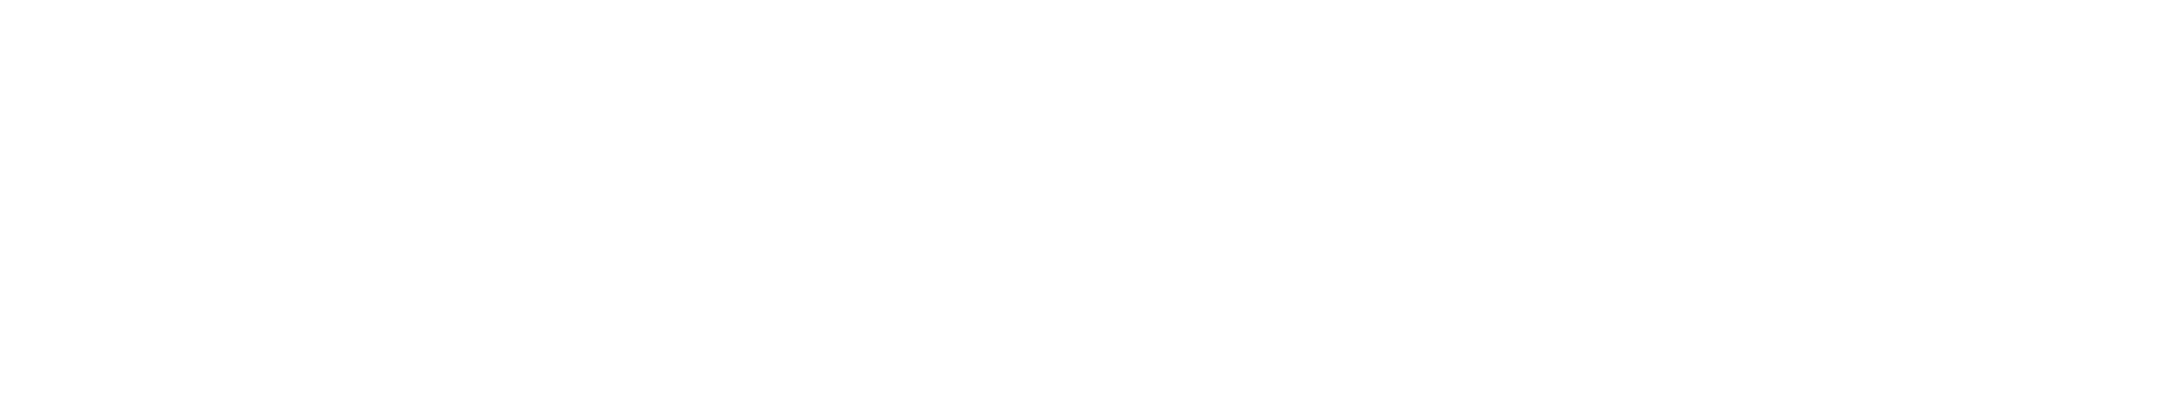 Kunde Laukien Logo, referenz